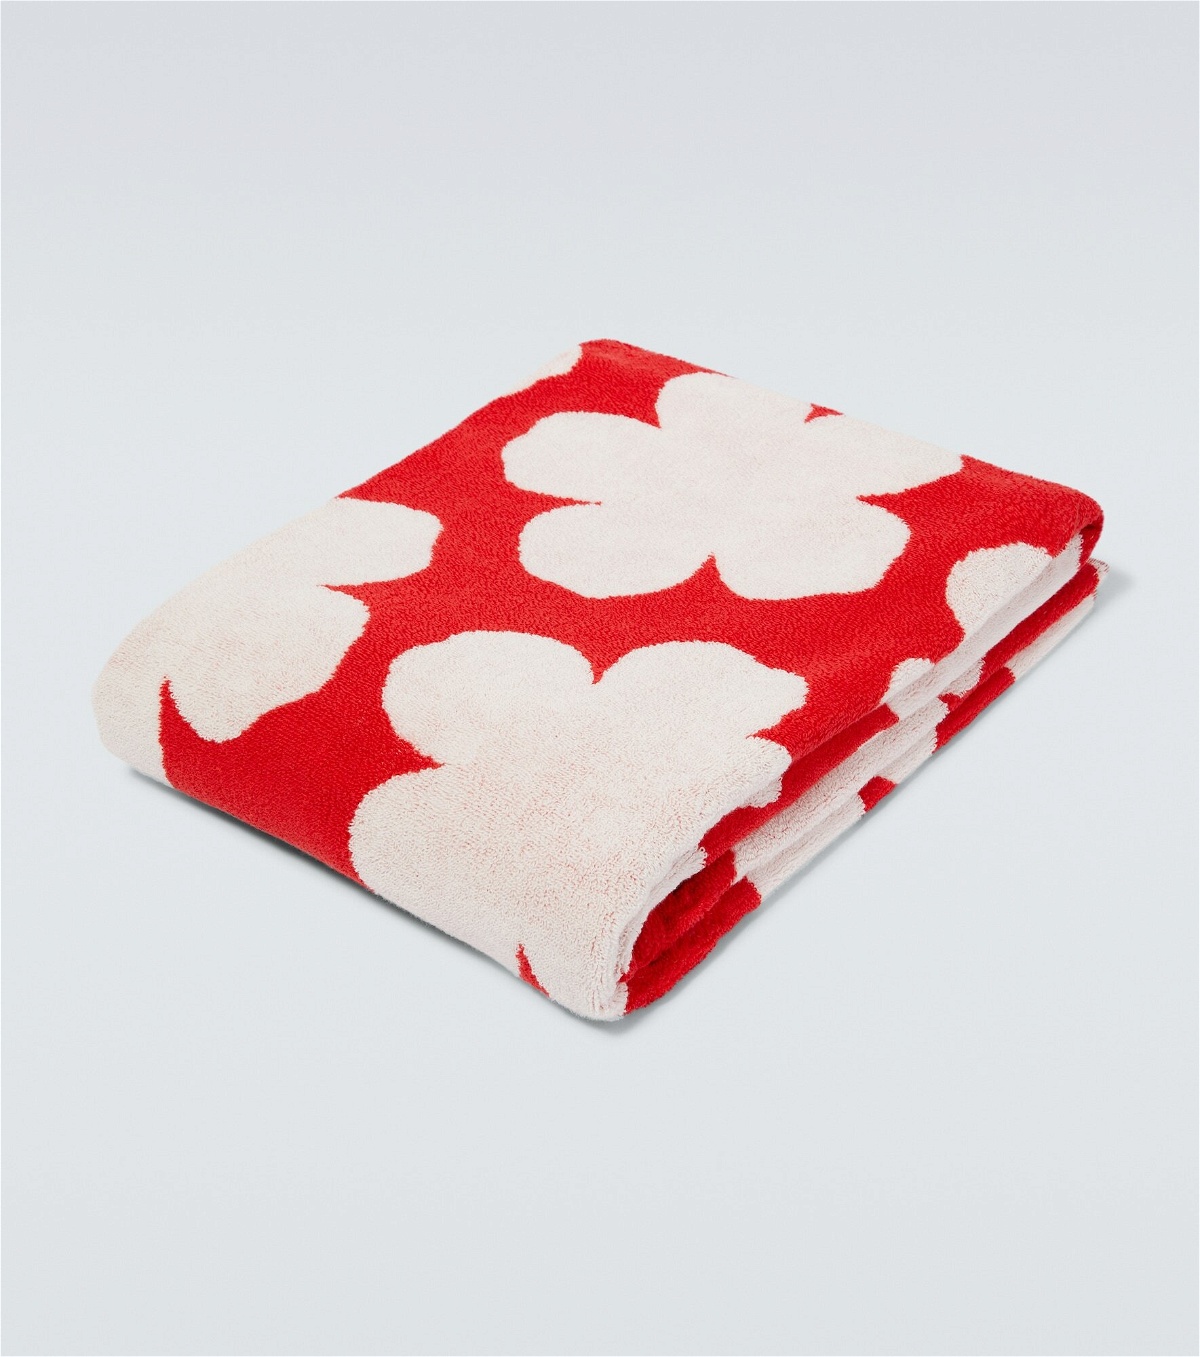 Kenzo - Printed cotton beach towel